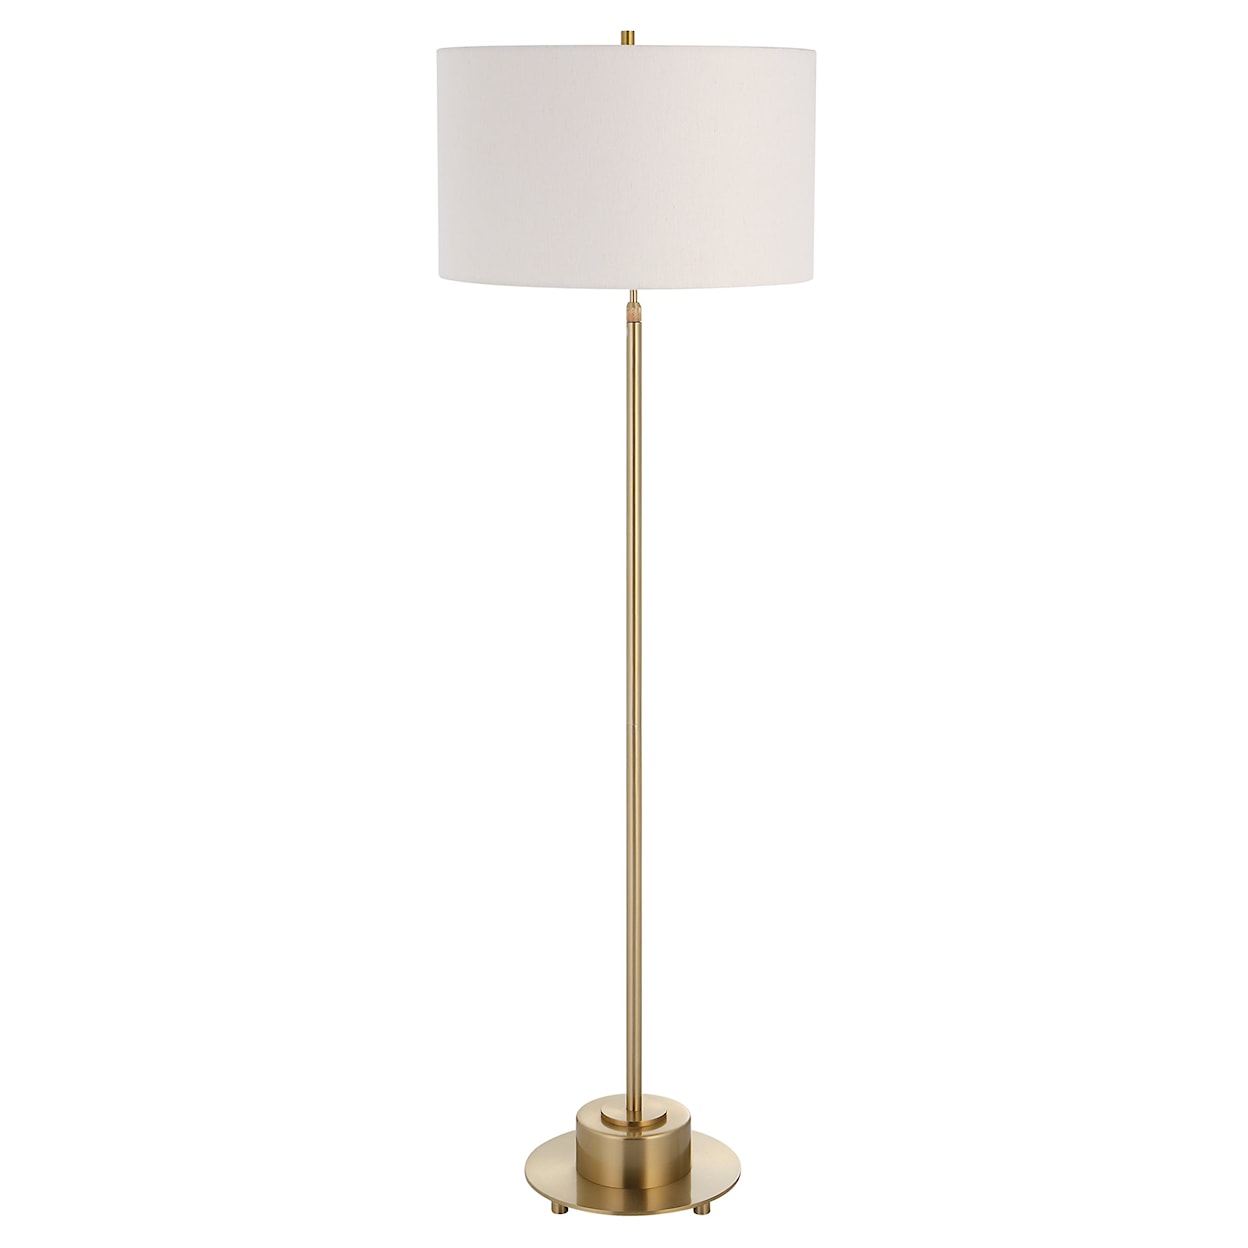 Uttermost Prominence Prominence Brass Floor Lamp